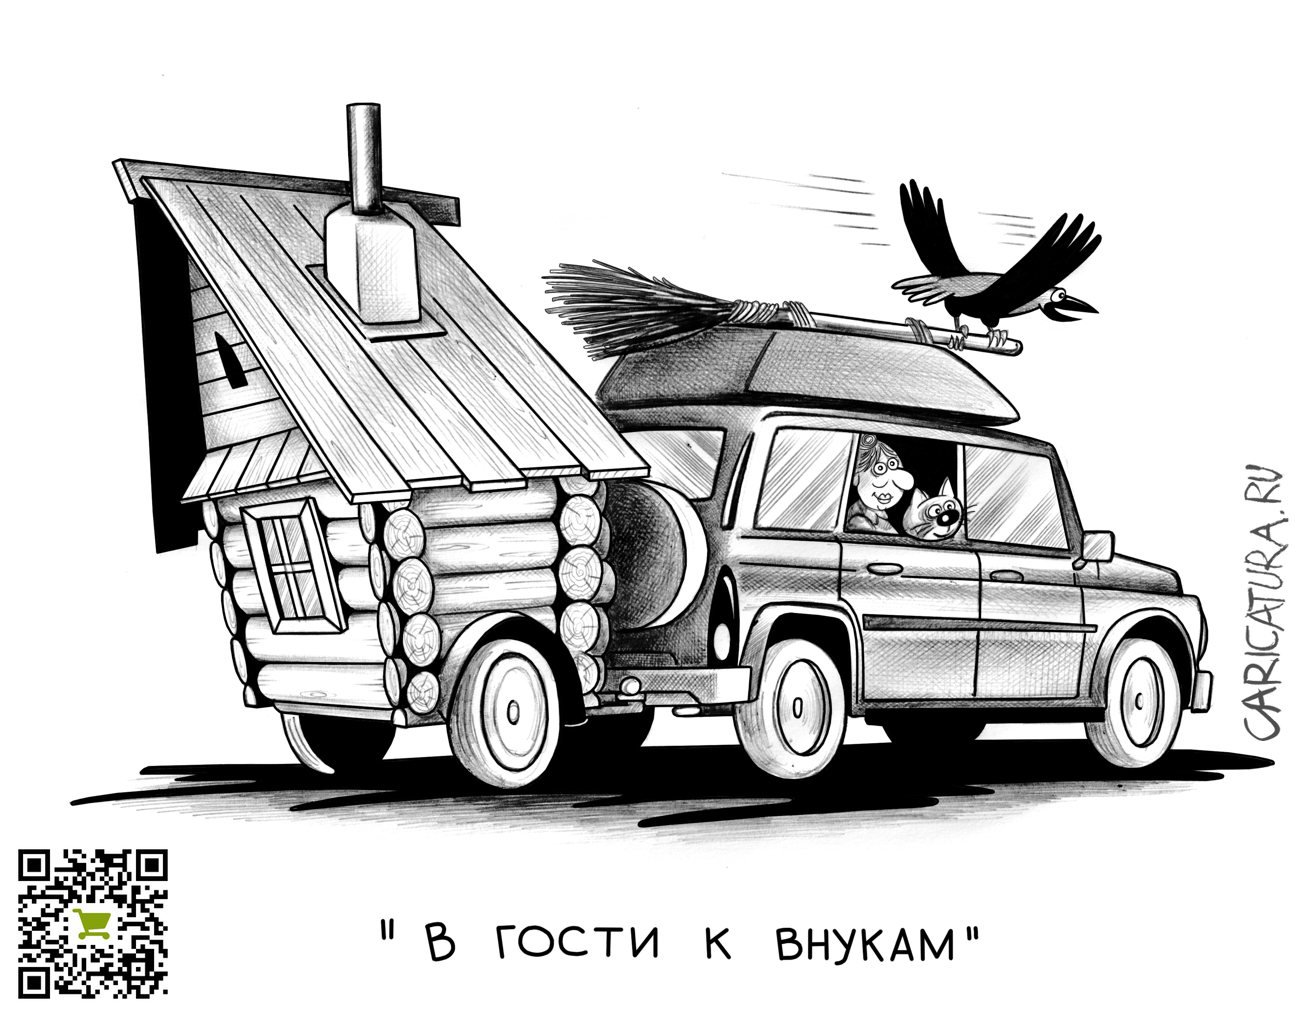 Карикатура "В гости к внукам", Сергей Корсун